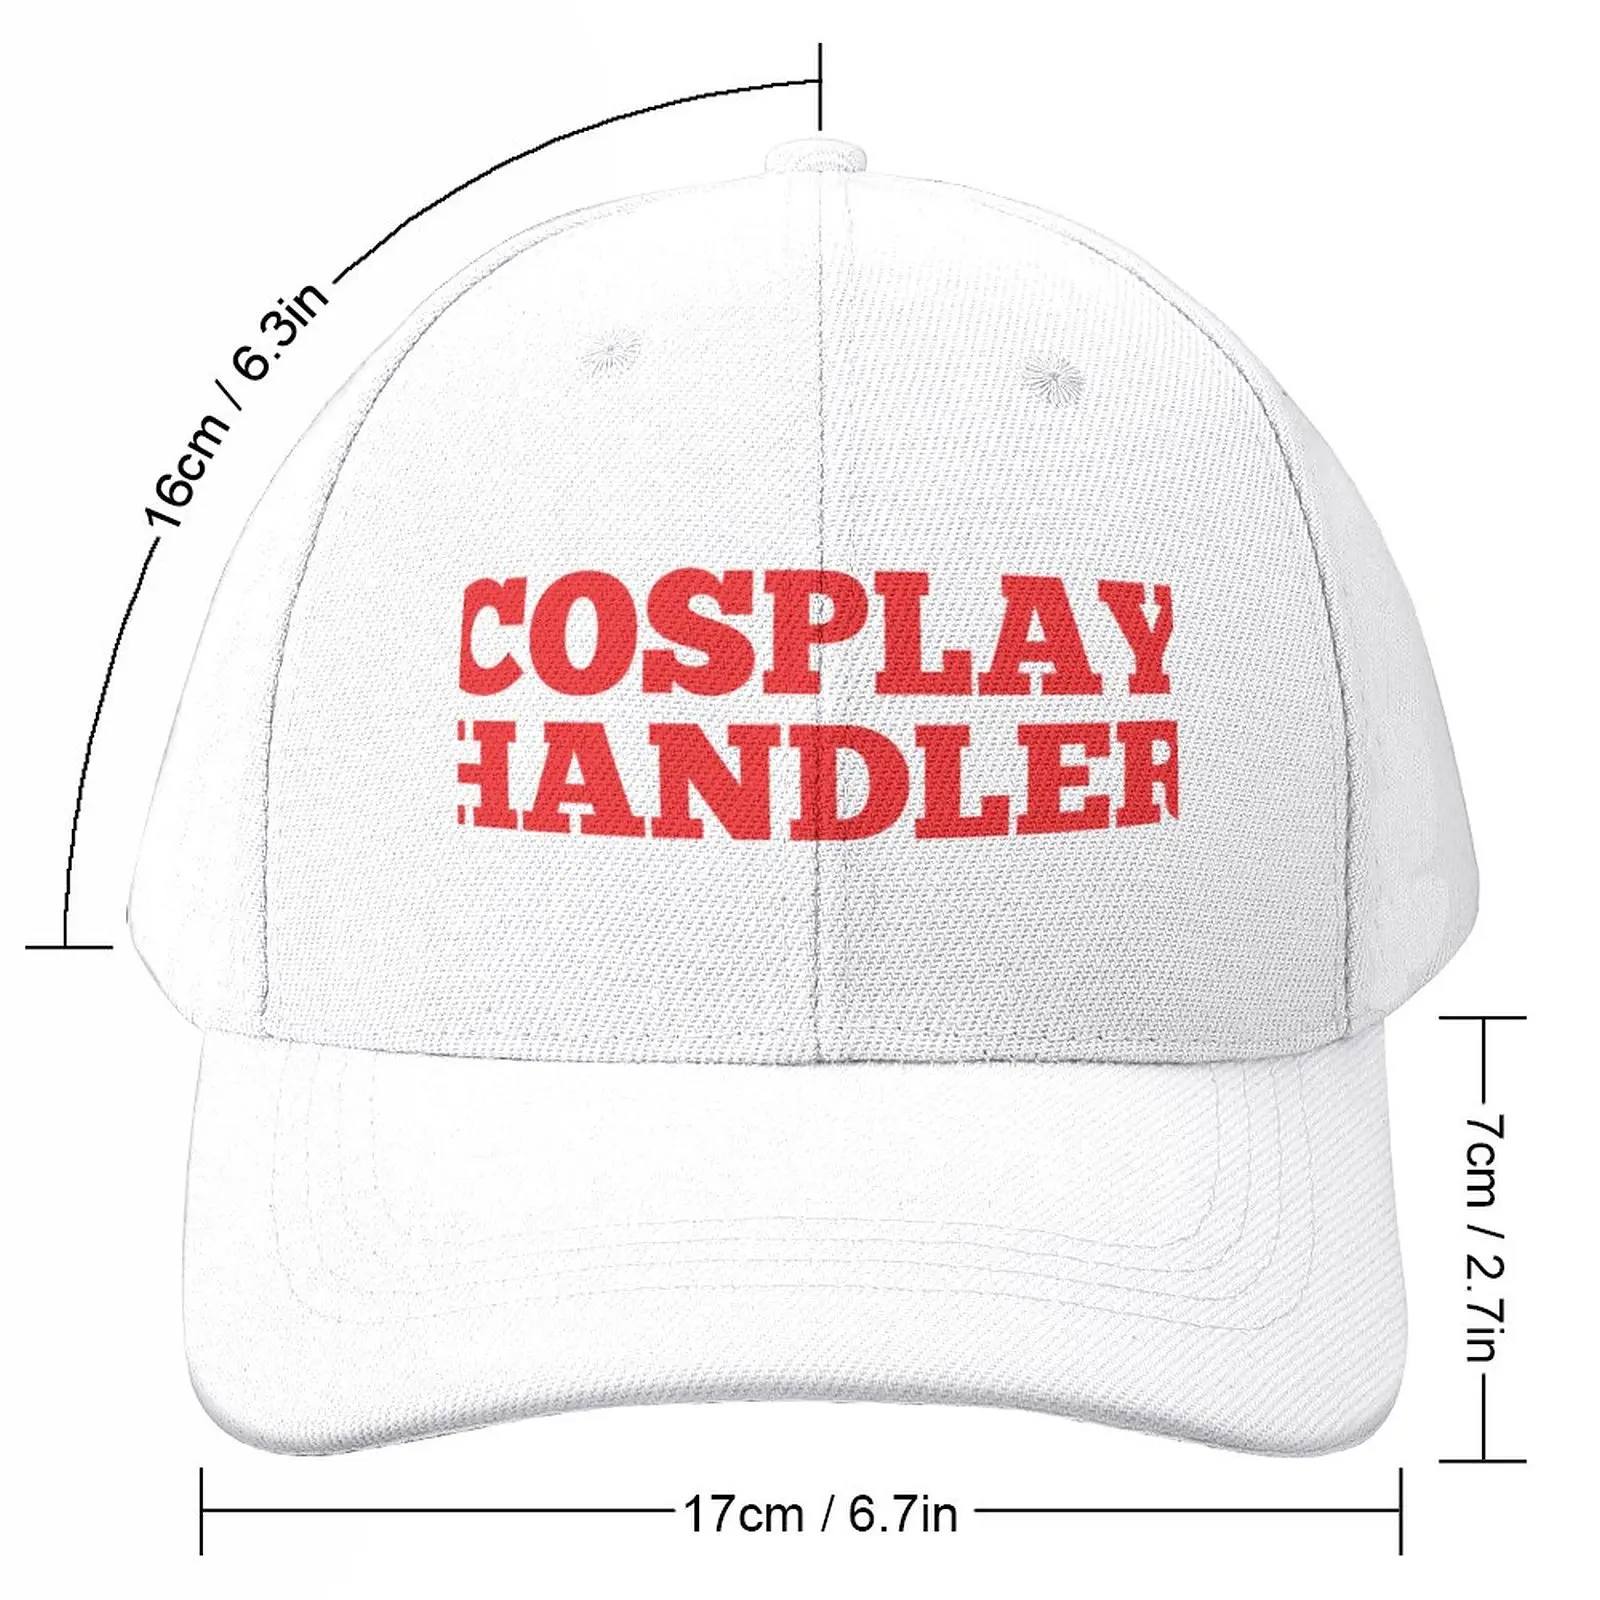 Cosplay Handler Baseball Cap, Black Horse Hat, Beach Bag para mulheres e homens